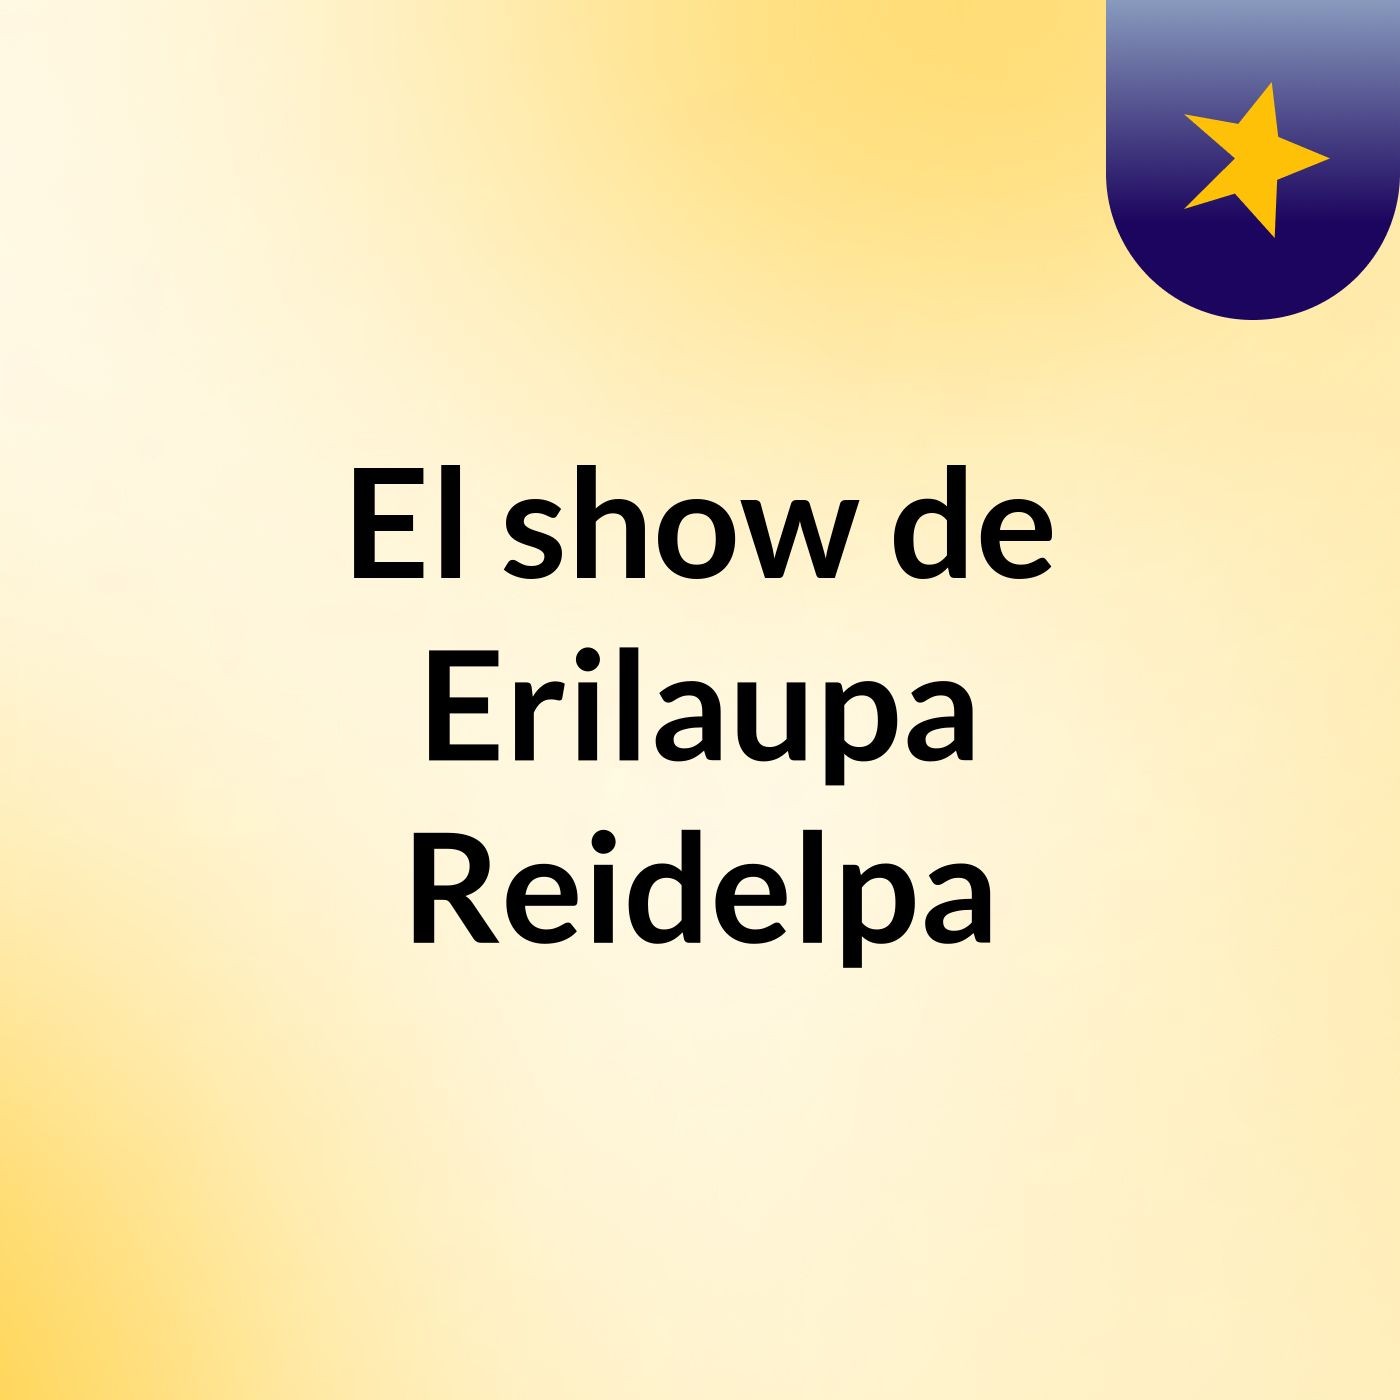 El show de Erilaupa Reidelpa